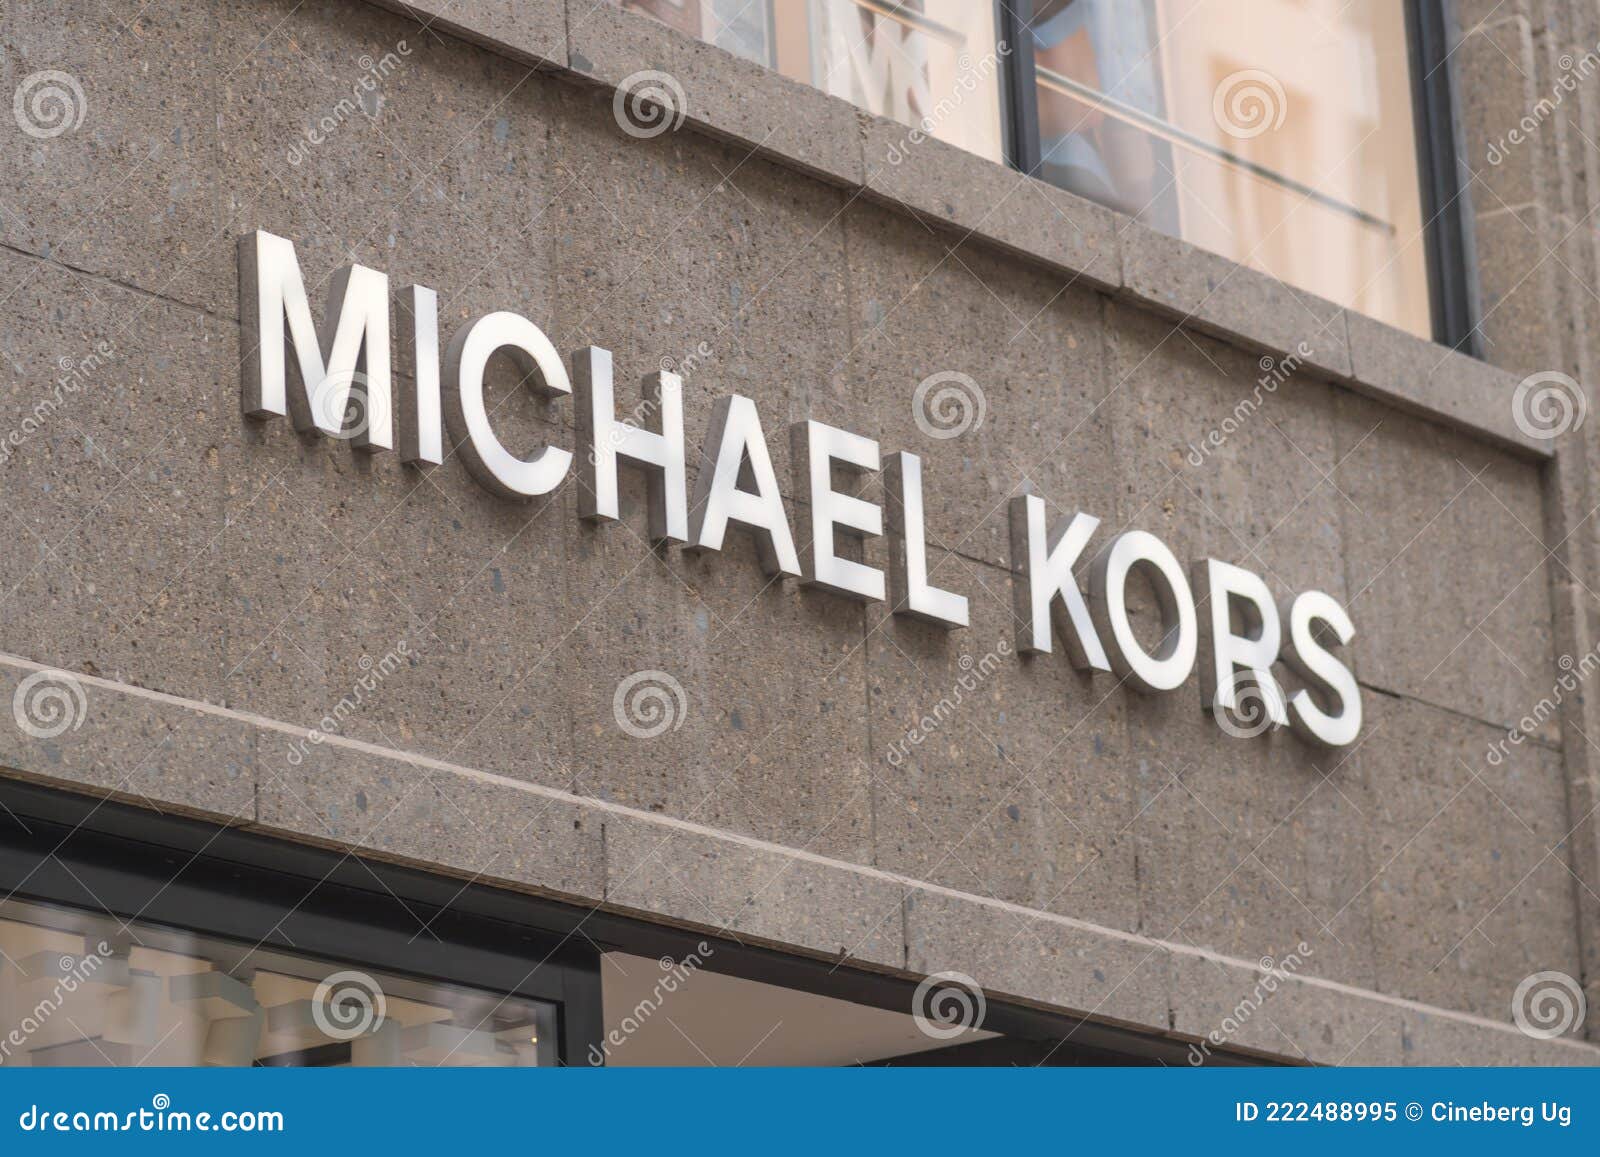 235 Michael Kors Photos - Free Royalty-Free Stock Dreamstime